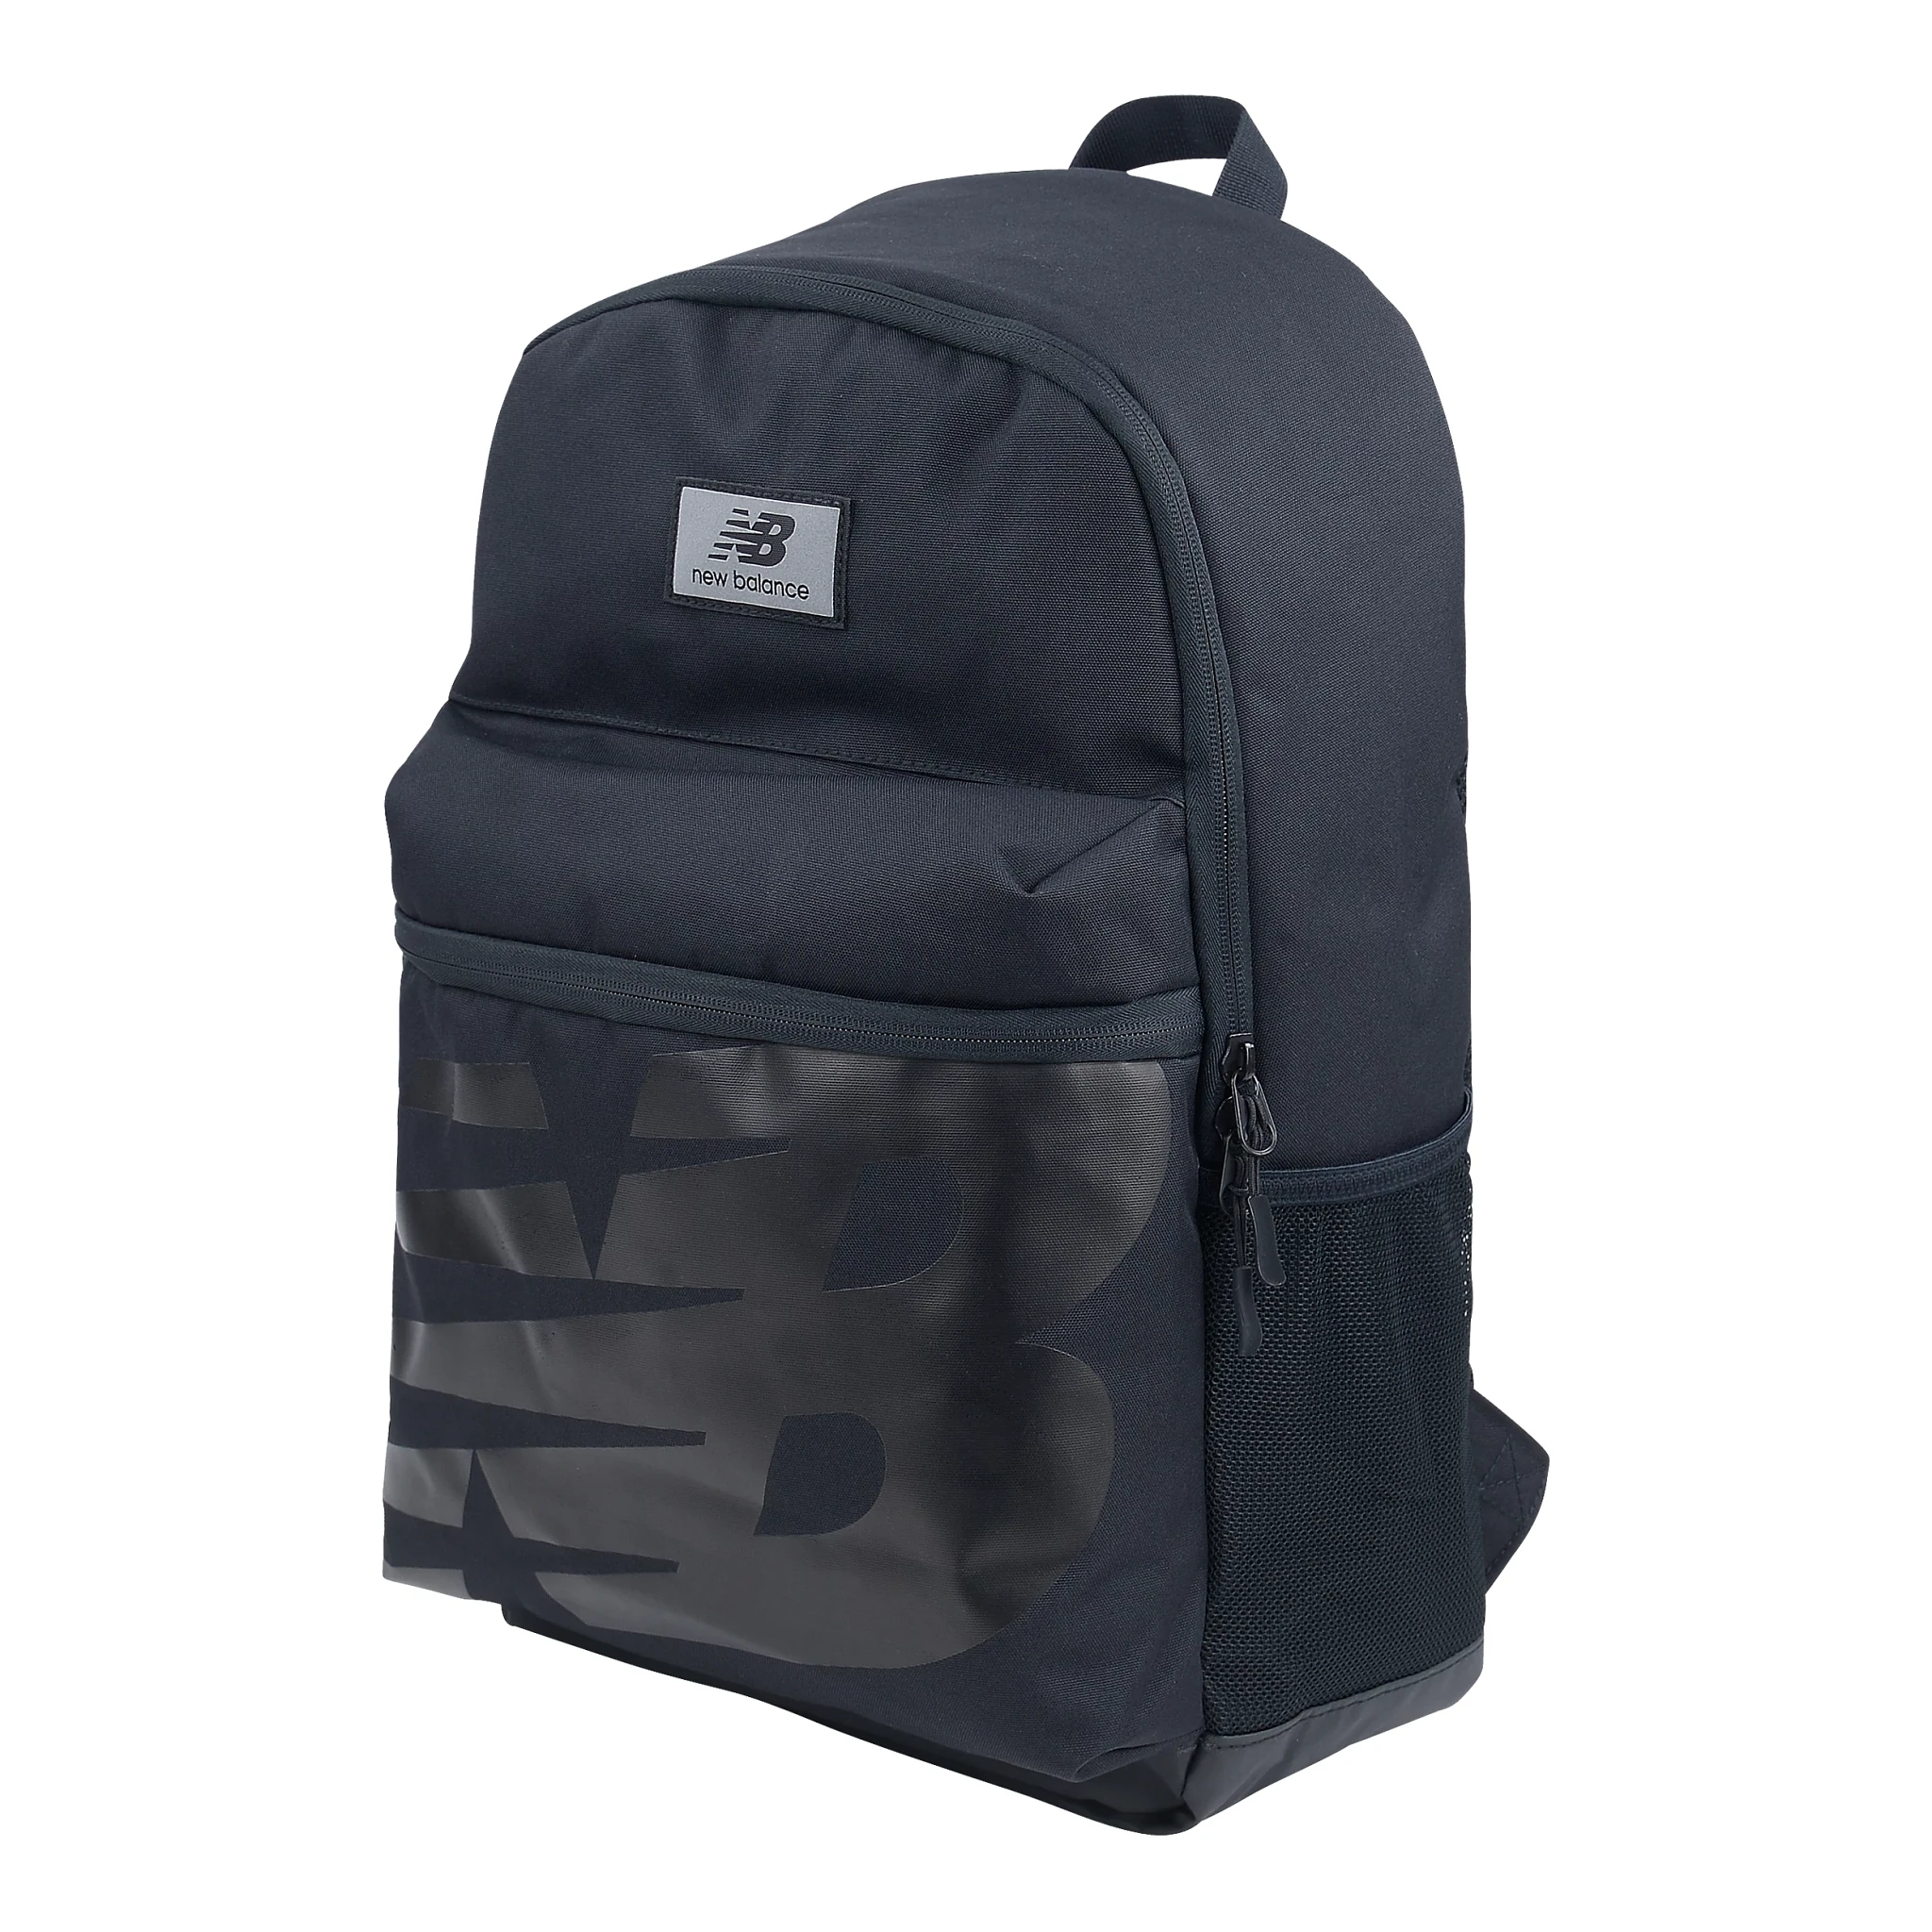 New Balance Medium Backpack LAB13618